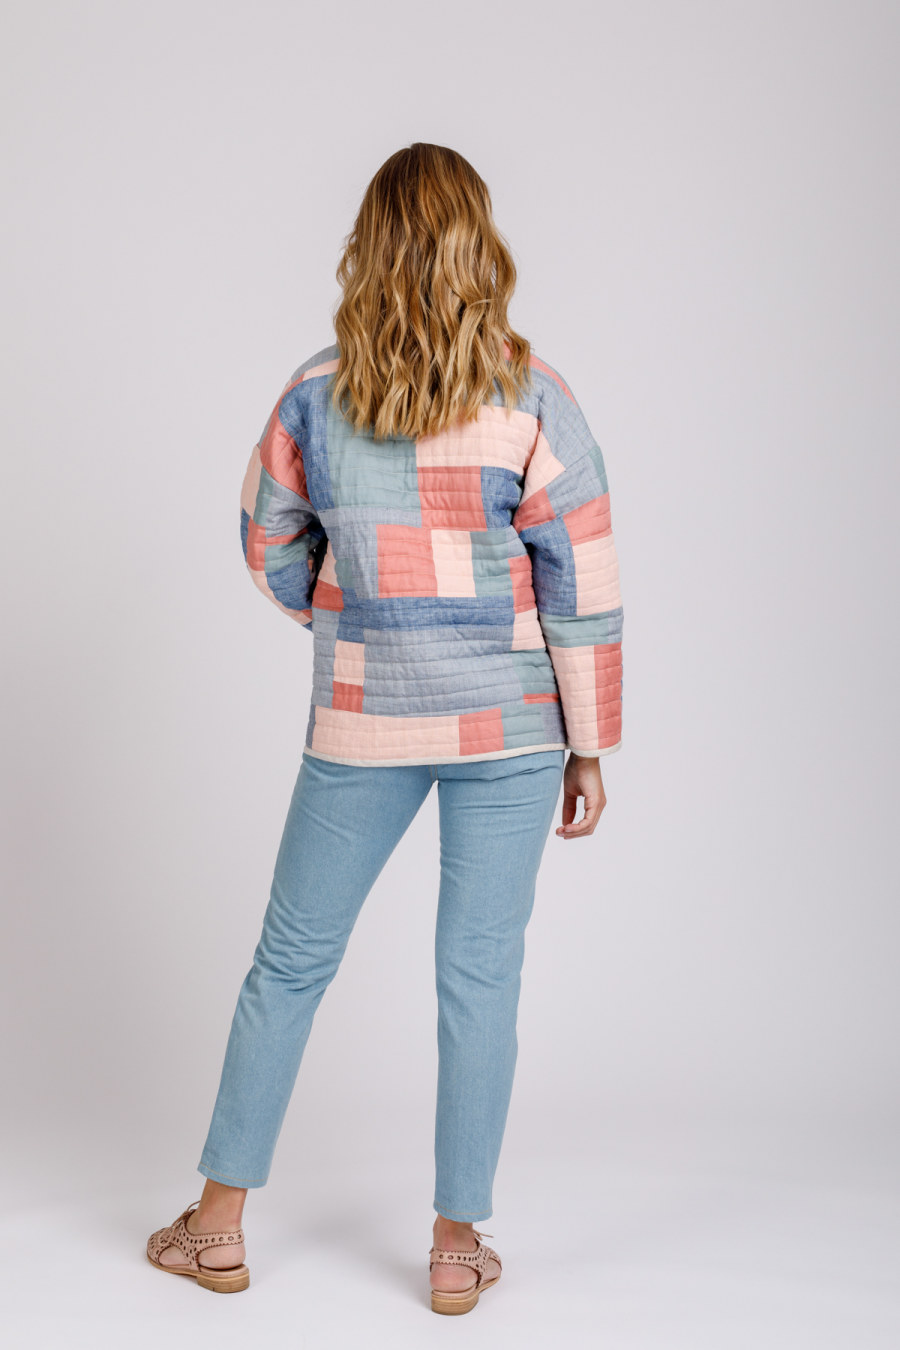 Hovea Jacket & Coat Pattern By Megan Nielsen